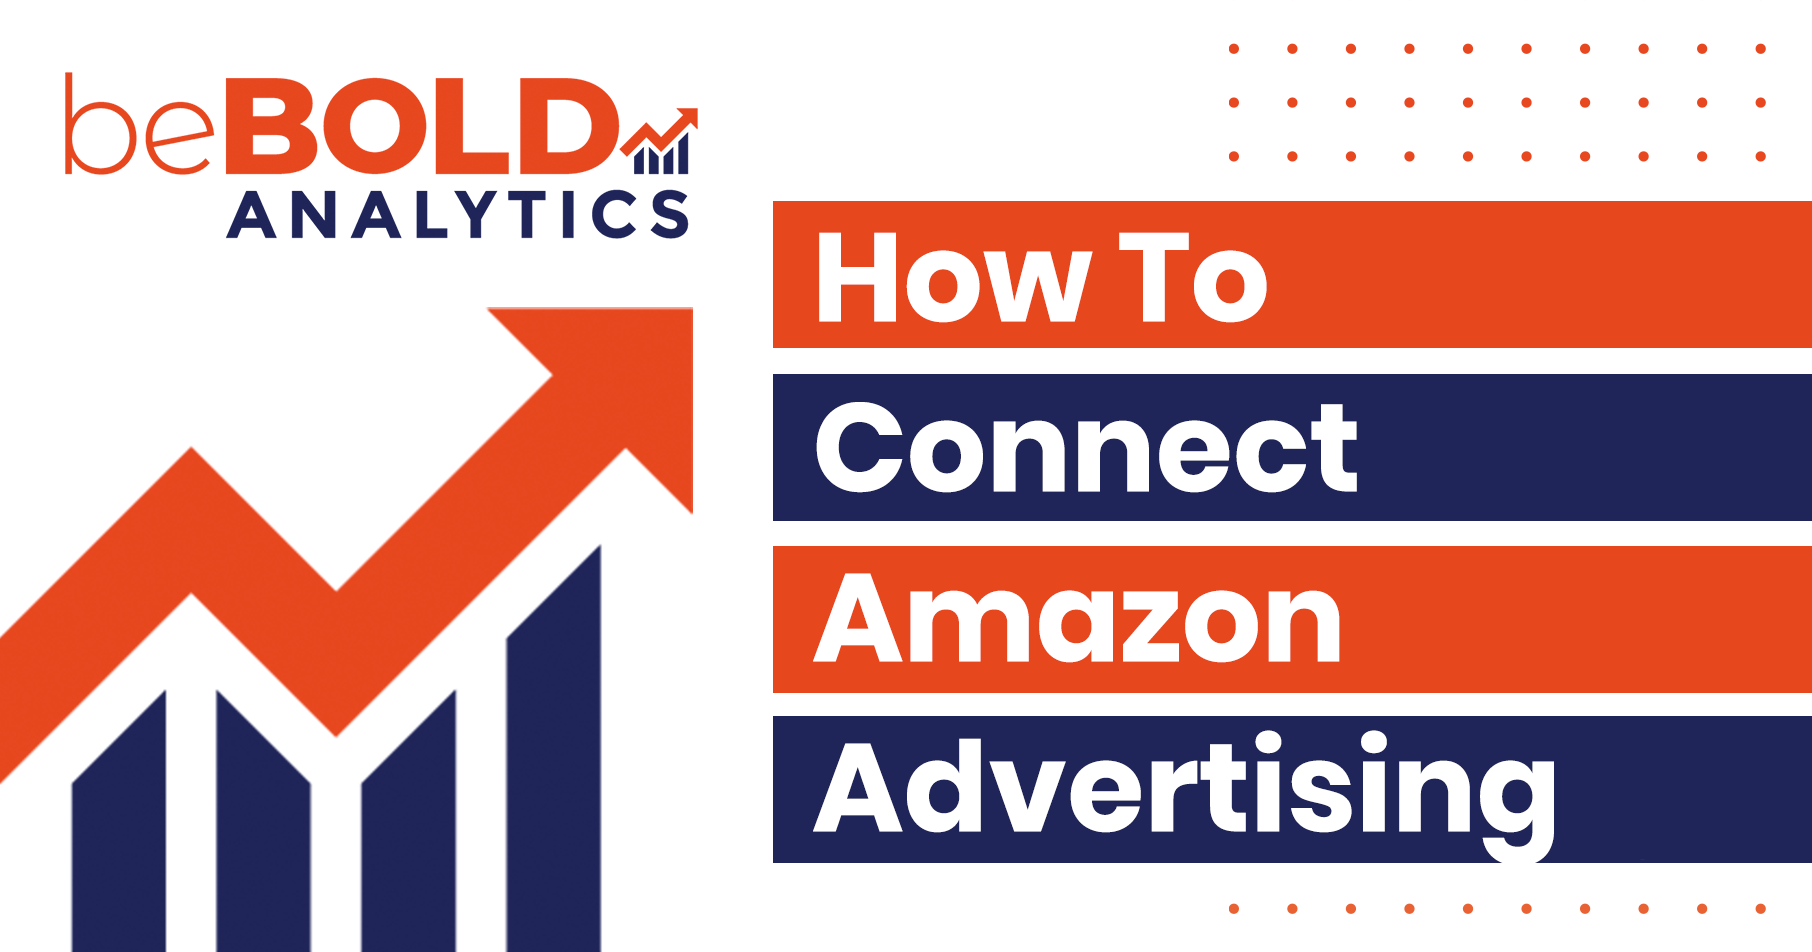 Connect Amazon Advertising to beBOLD Analytics